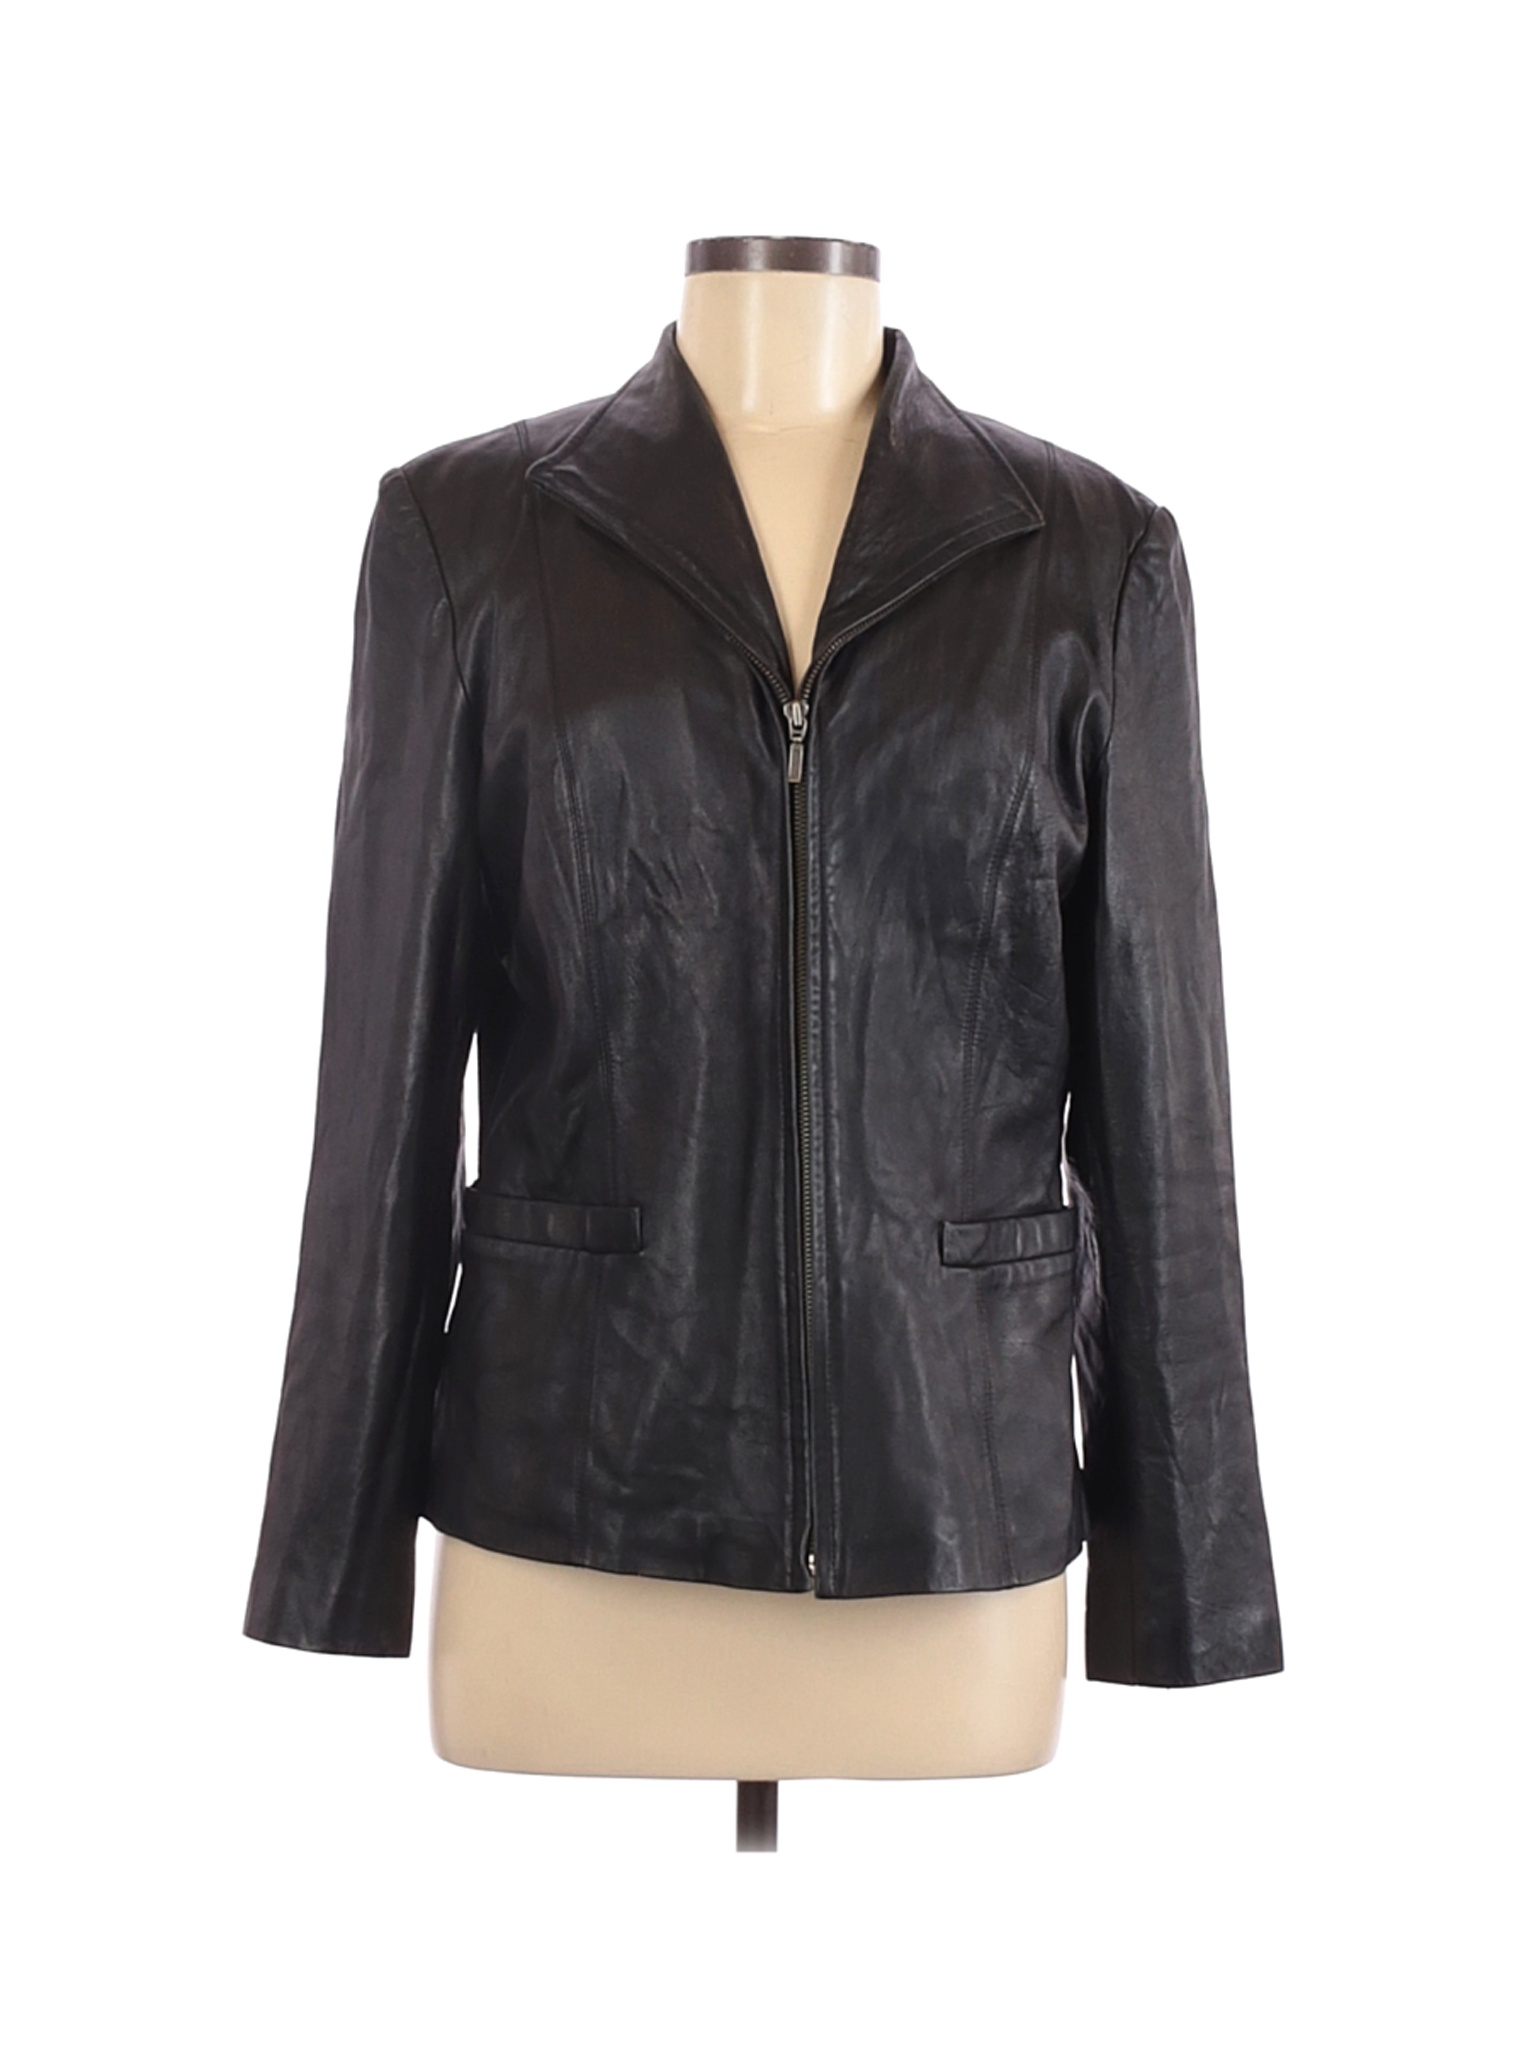 JLC New York Women Black Leather Jacket M | eBay